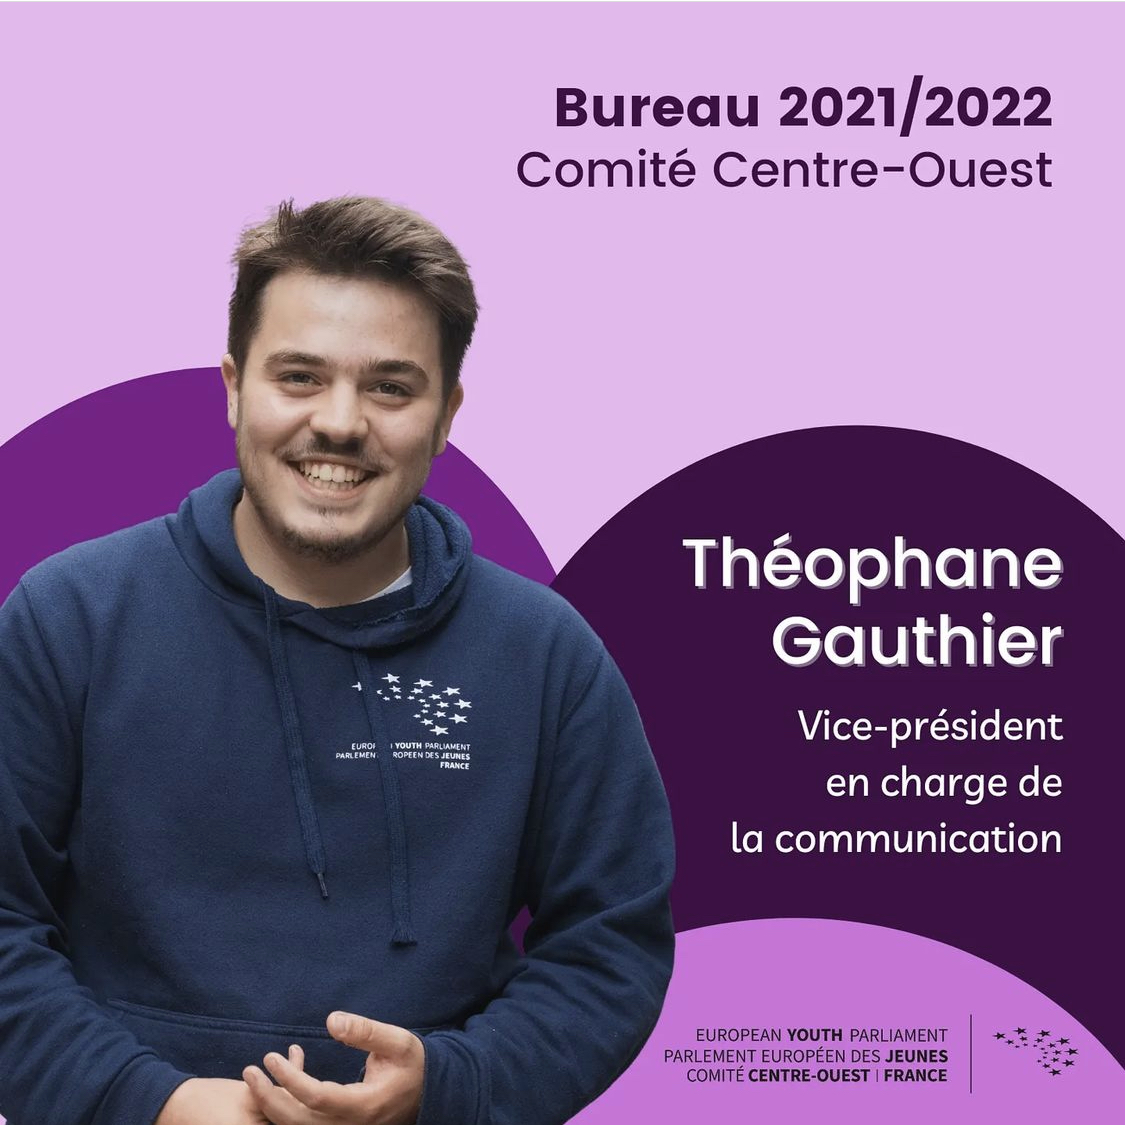 Théophane Gauthier